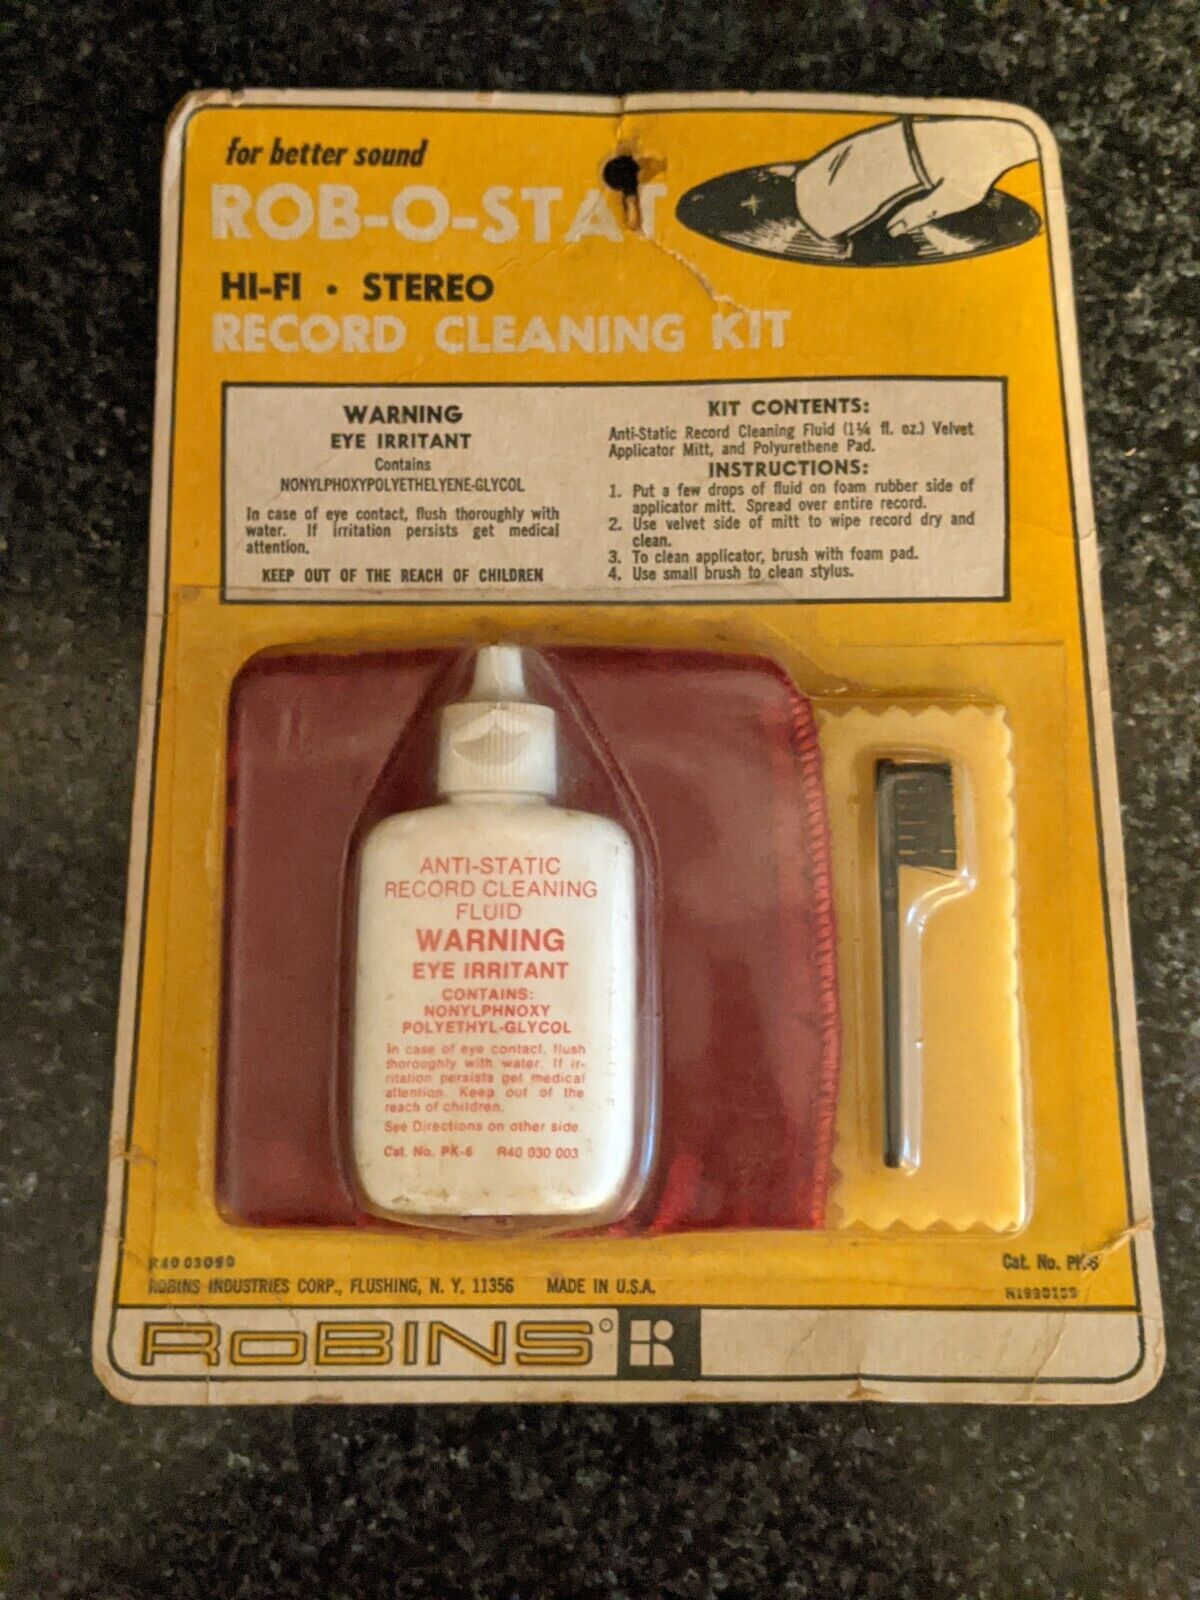 Robin's Rob-o-stat Hi-fi• Stereo Record Cleaning Kit No.pk-6 New Old Stock